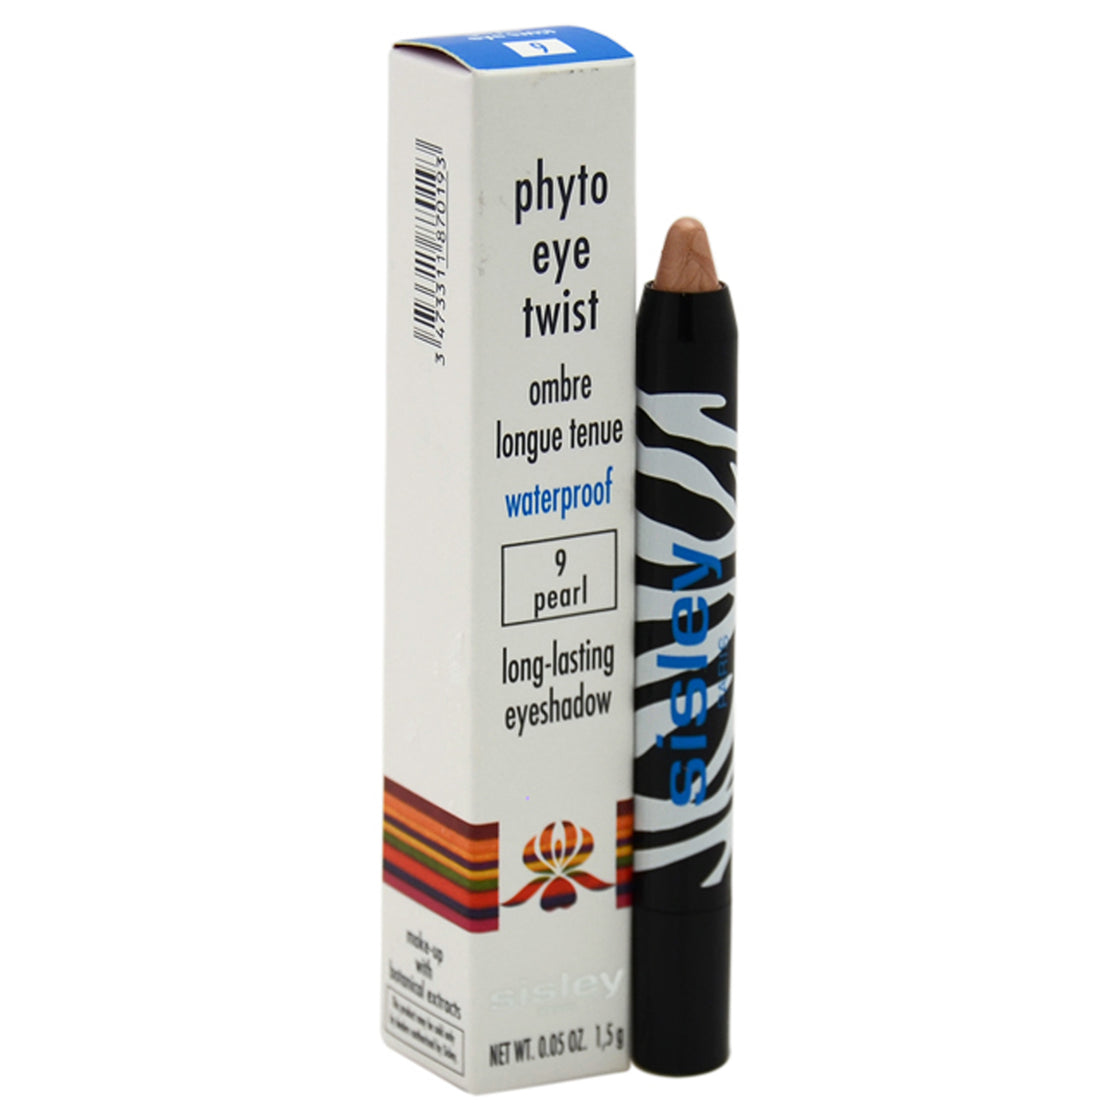 Phyto-Eye Twist Waterproof Eyeshadow - 9 Pearl by Sisley for Women - 0.05 oz Eye Shadow